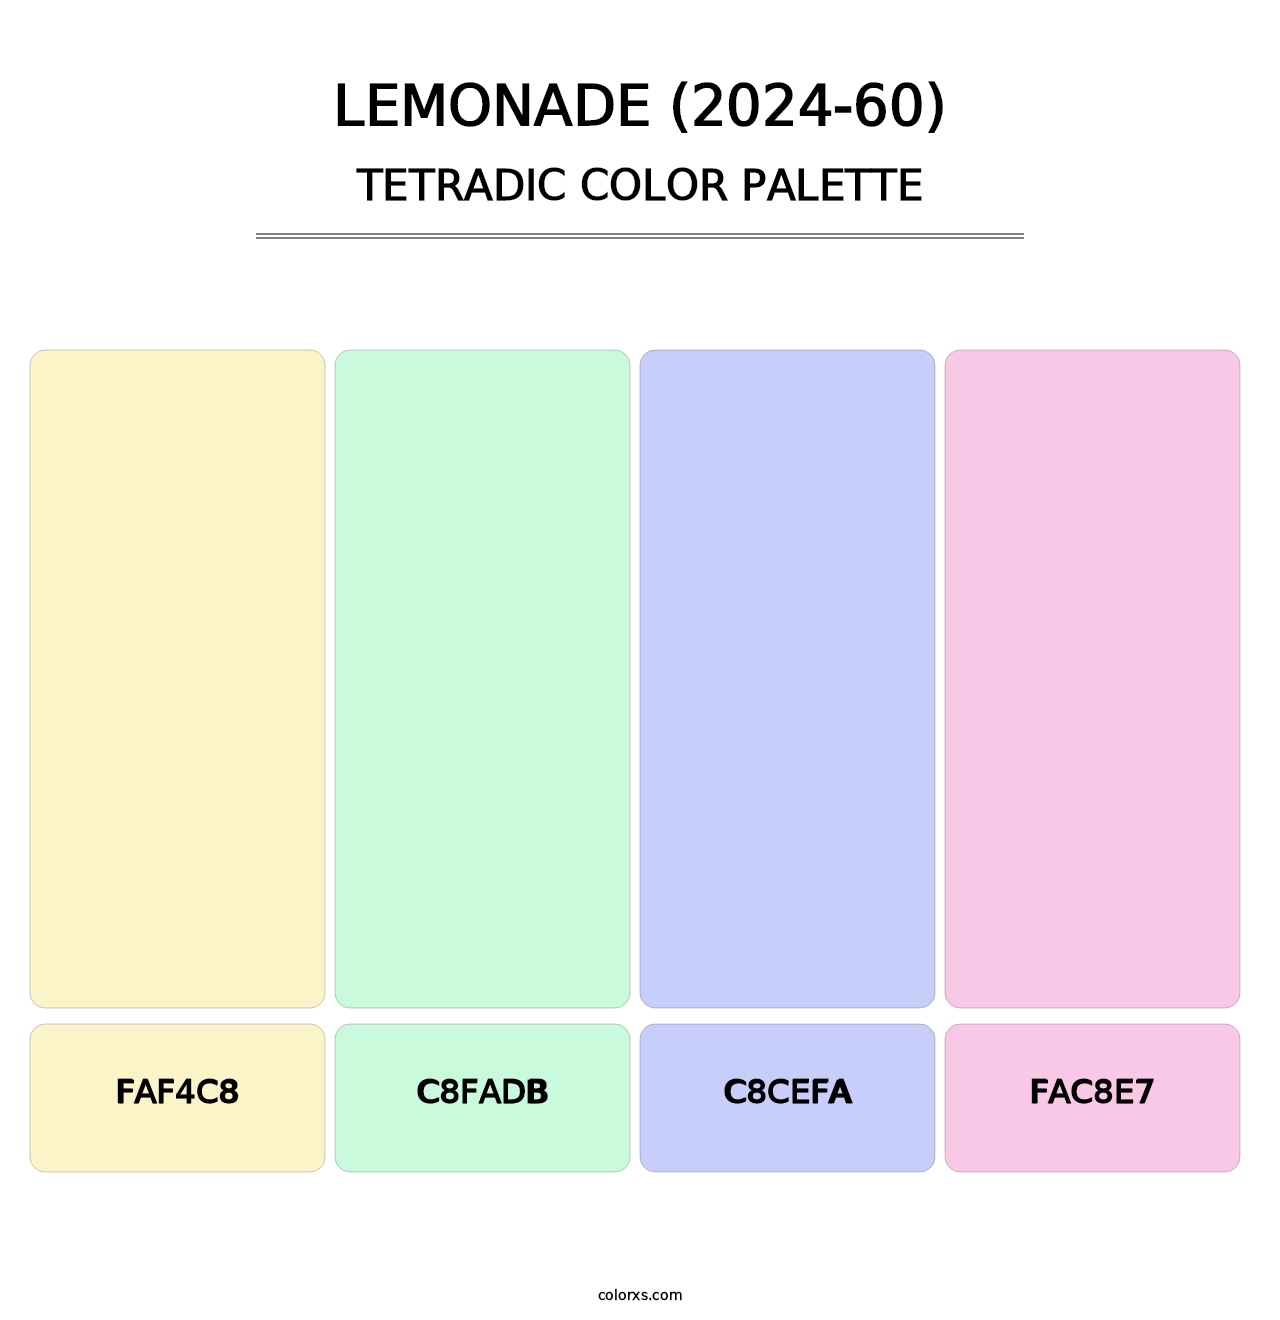 Lemonade (2024-60) - Tetradic Color Palette